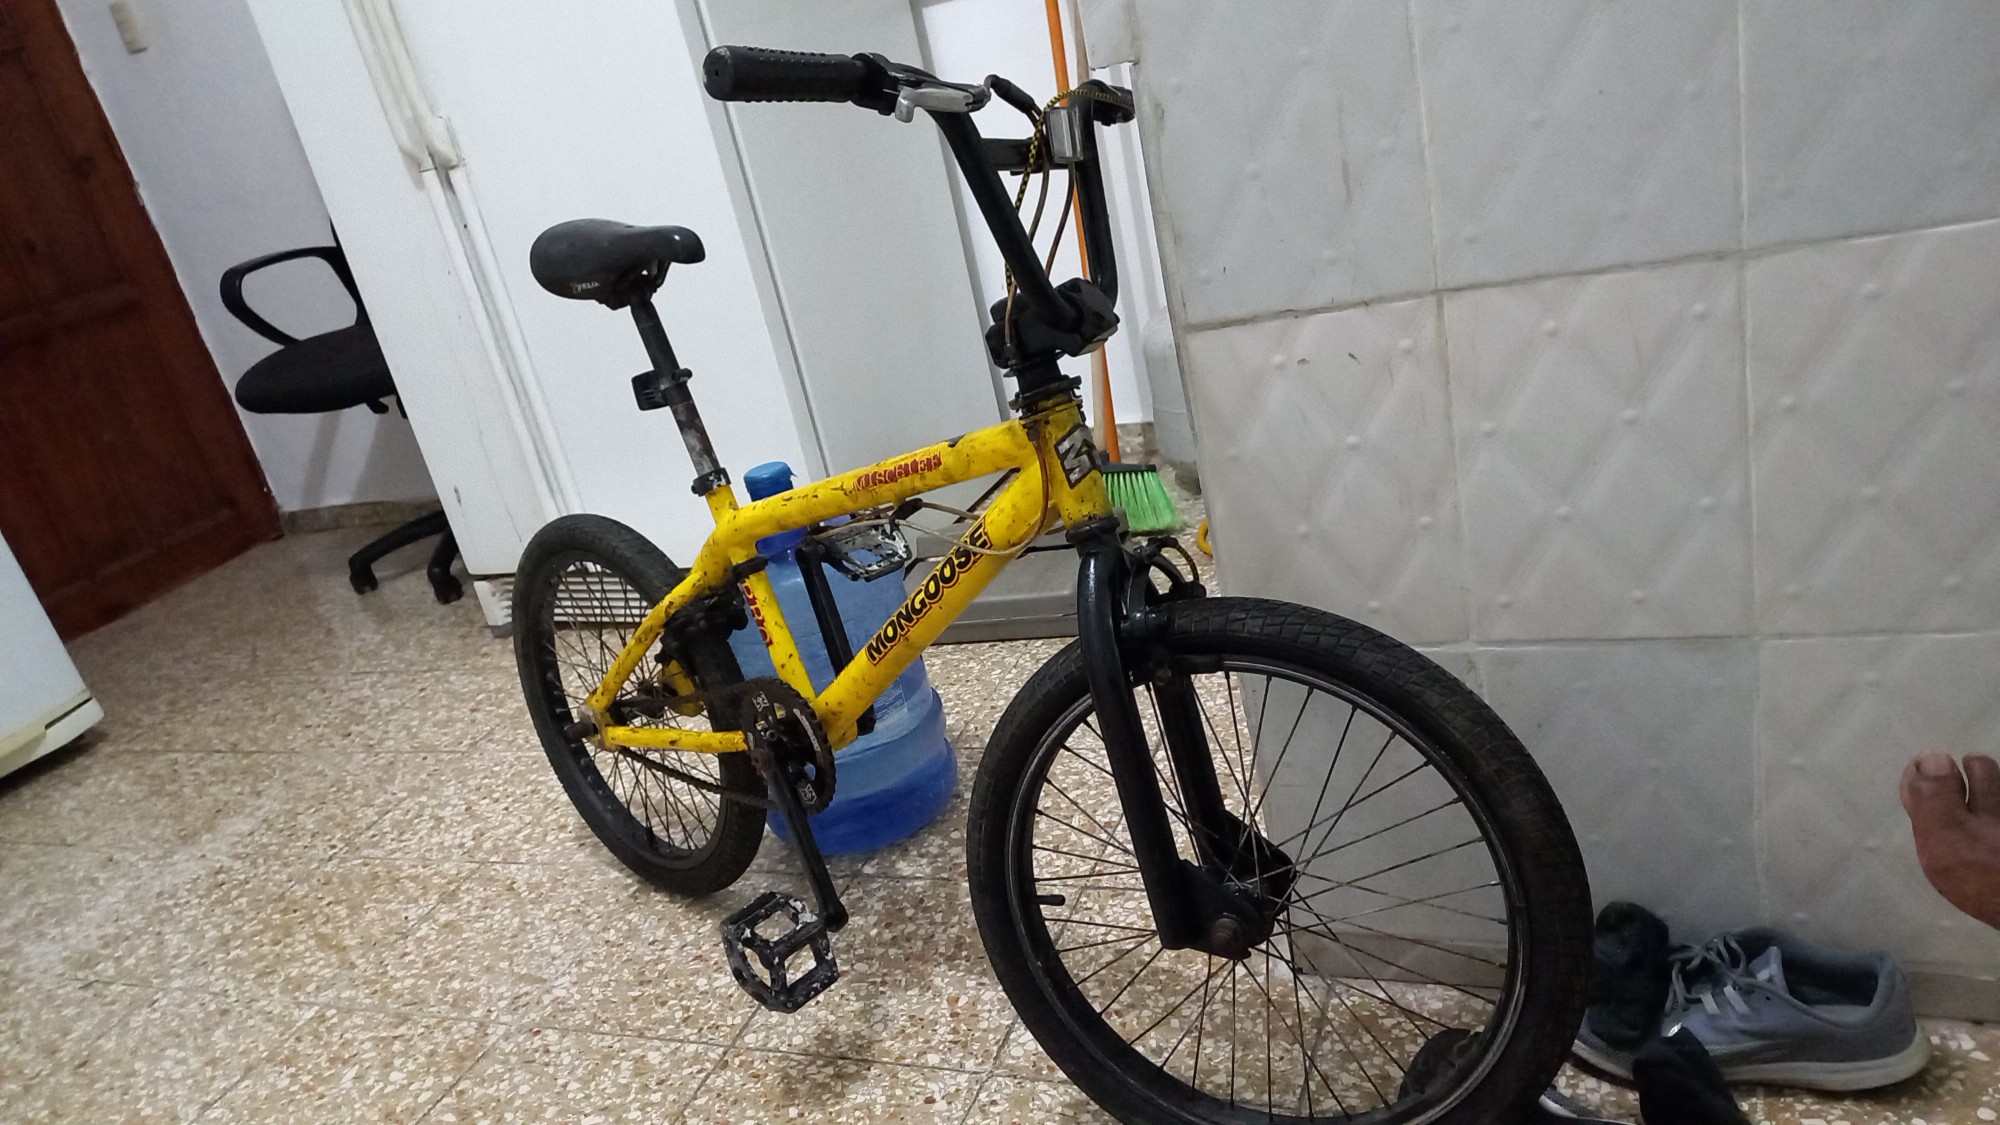 bicicletas y accesorios - Bicicleta mongoose para saltos aro 20 en buen estado 8